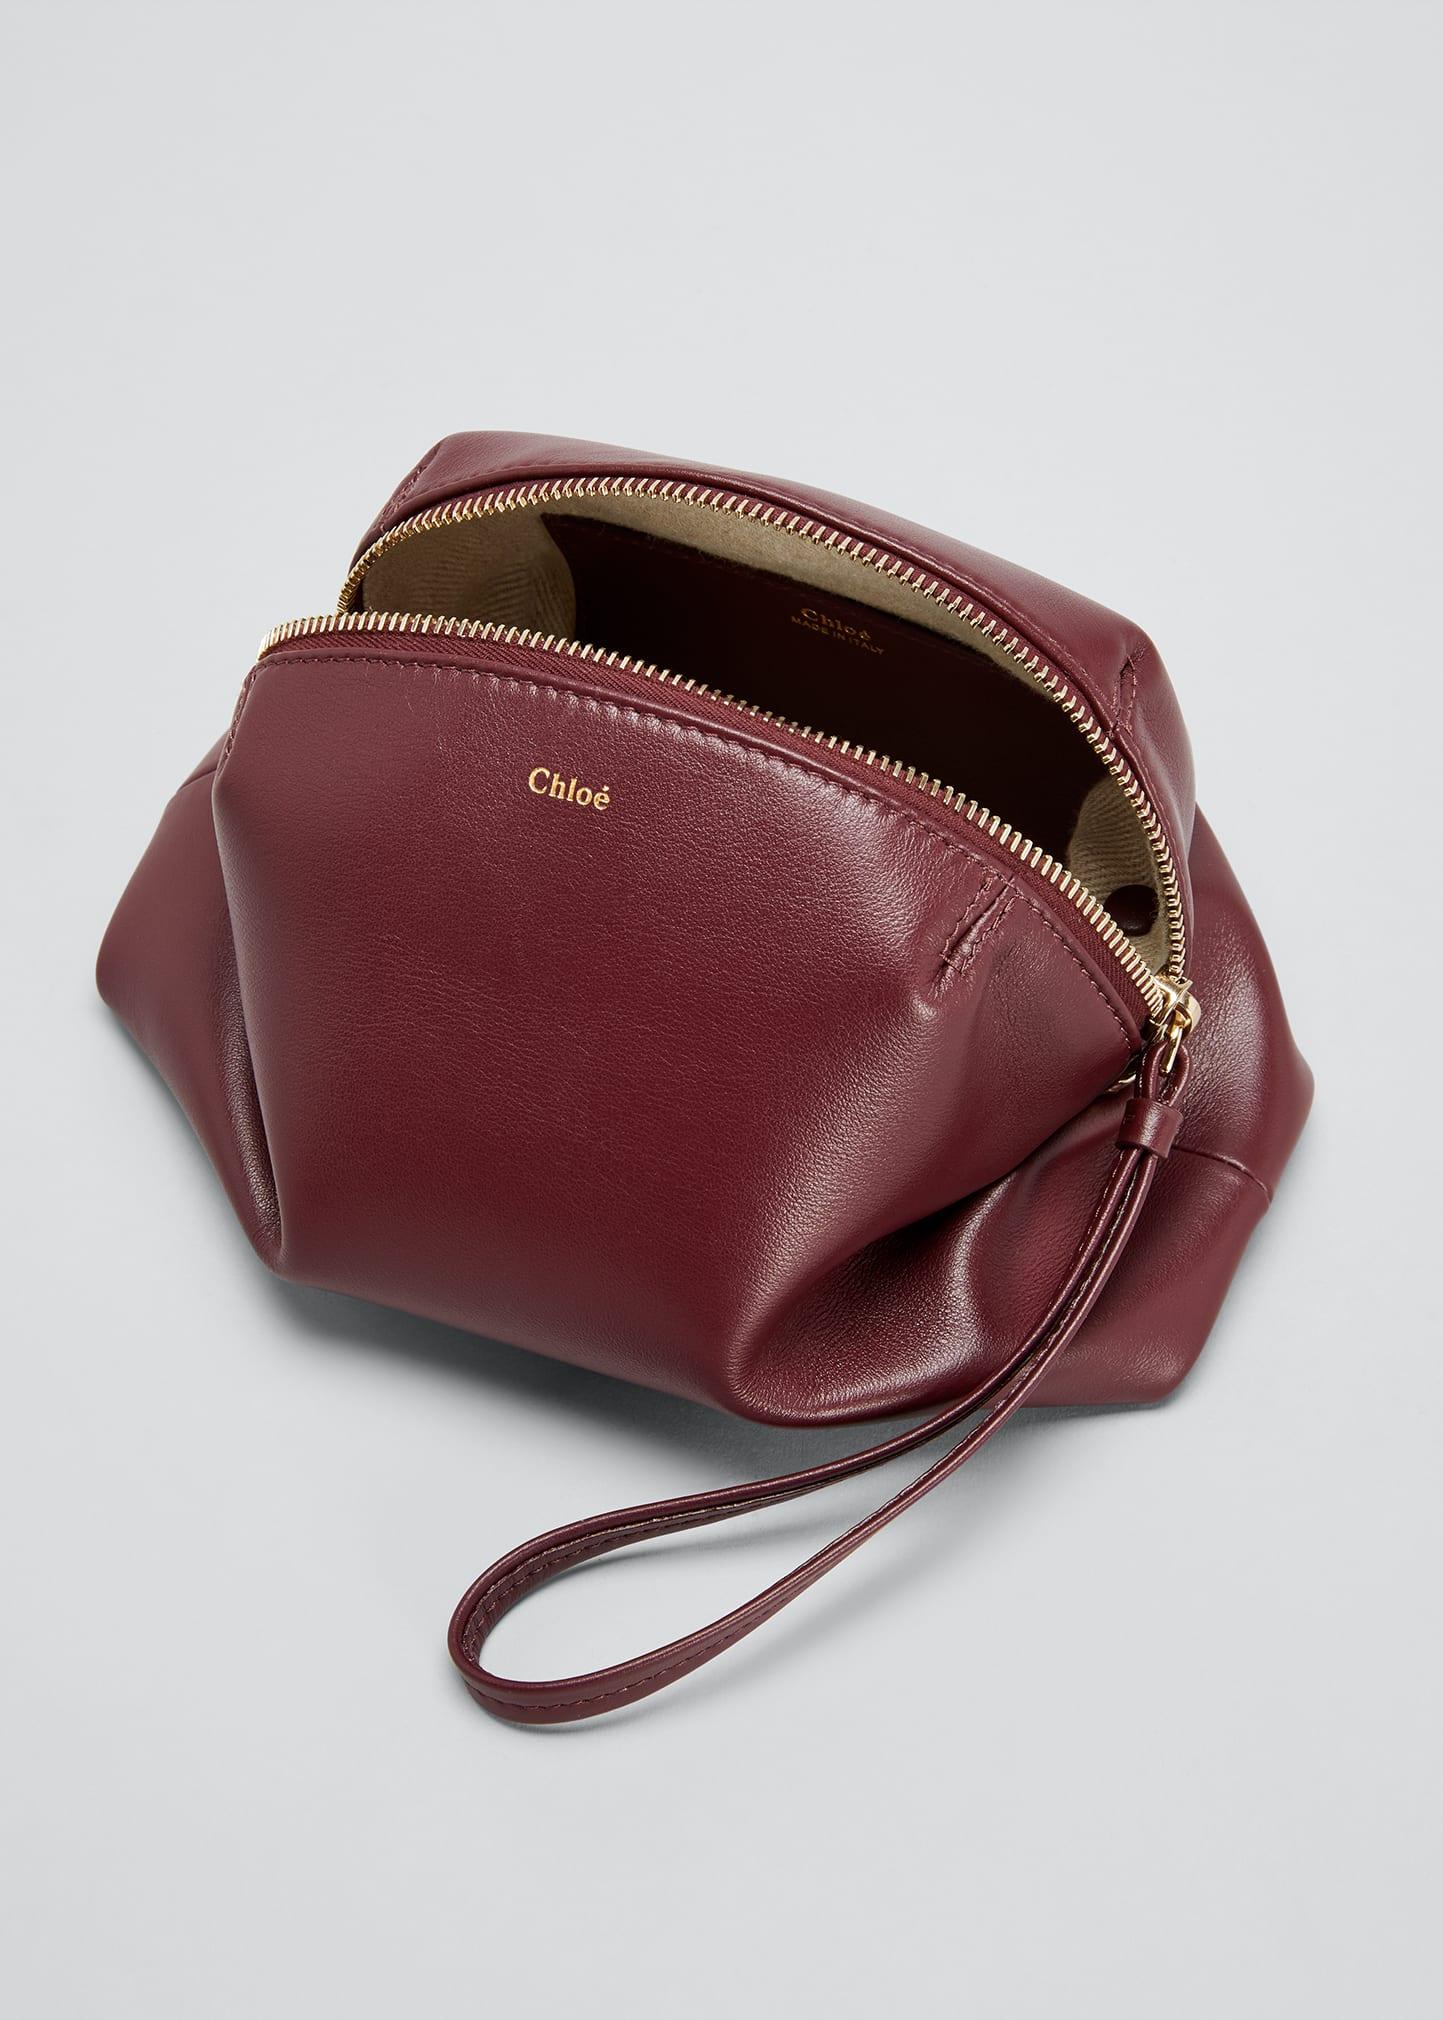 Chloé Judy Mini Slouchy Leather Crossbody Bag in Red | Lyst